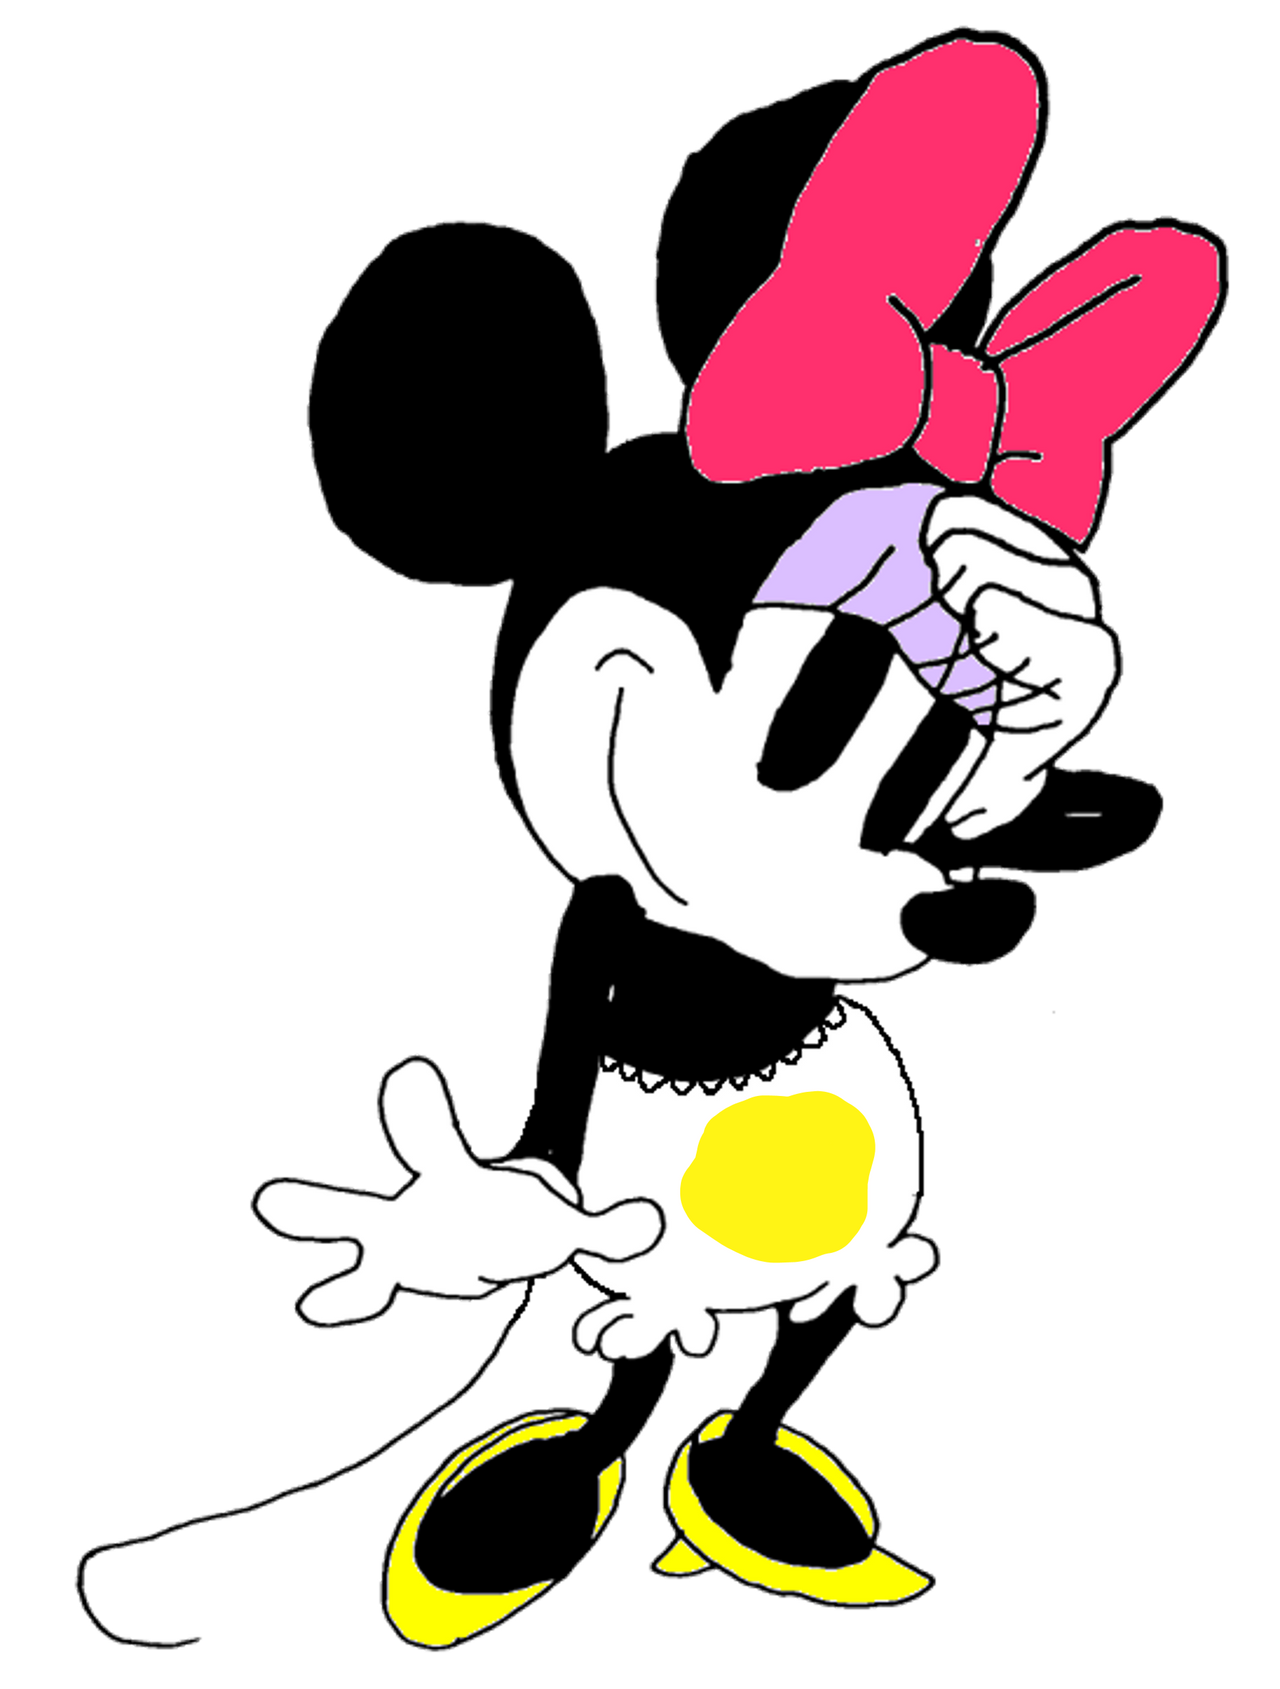 Minnie Mouse Peed her Underwear by mansouralawadhi1 on DeviantArt